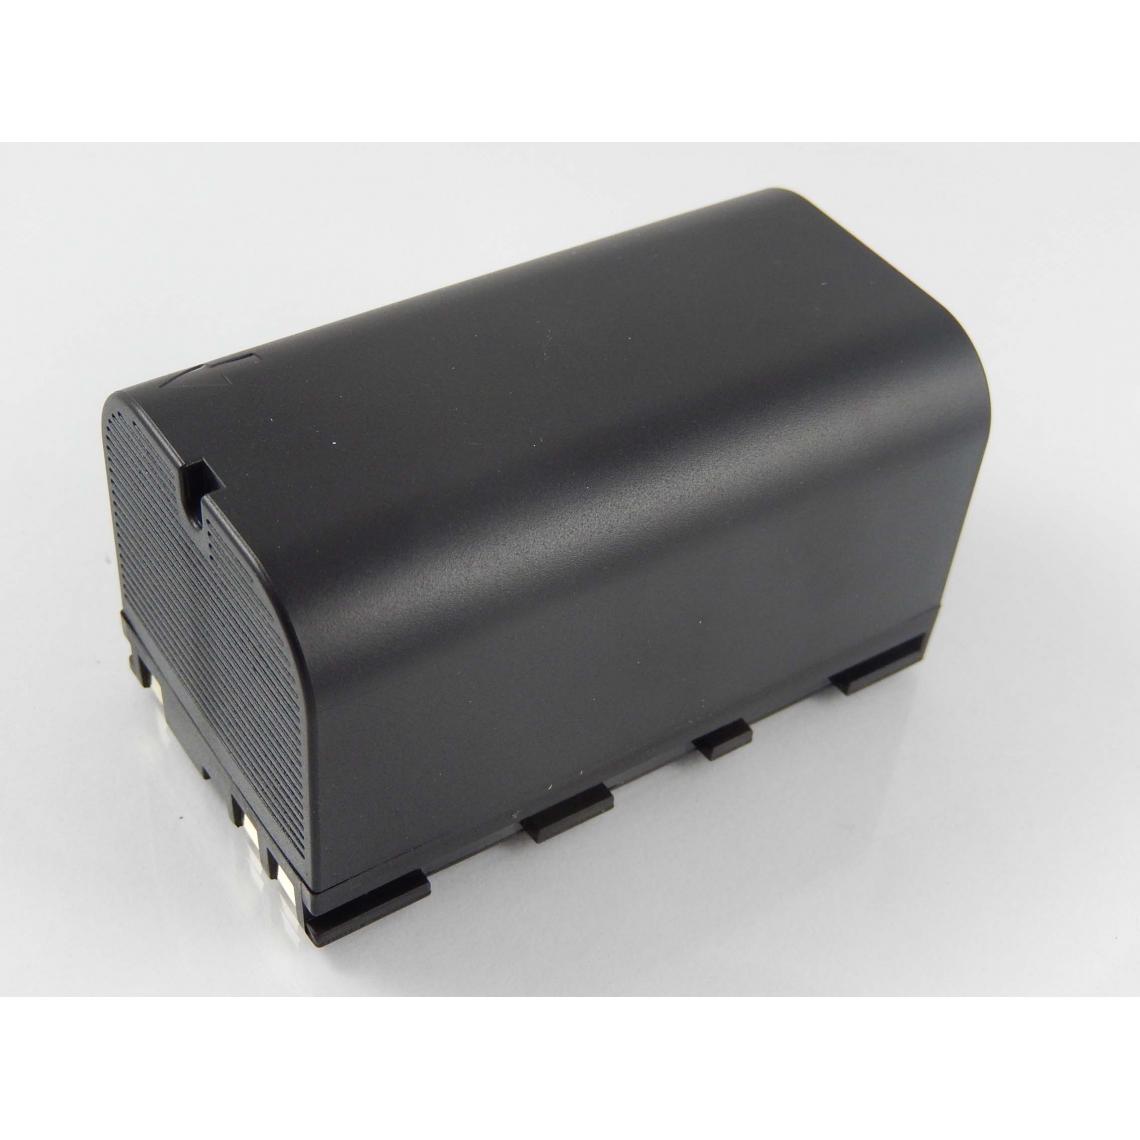 Vhbw - vhbw Batterie compatible avec Leica TS16 dispositif de mesure laser, outil de mesure (5600mAh, 7,4V, Li-ion) - Piles rechargeables